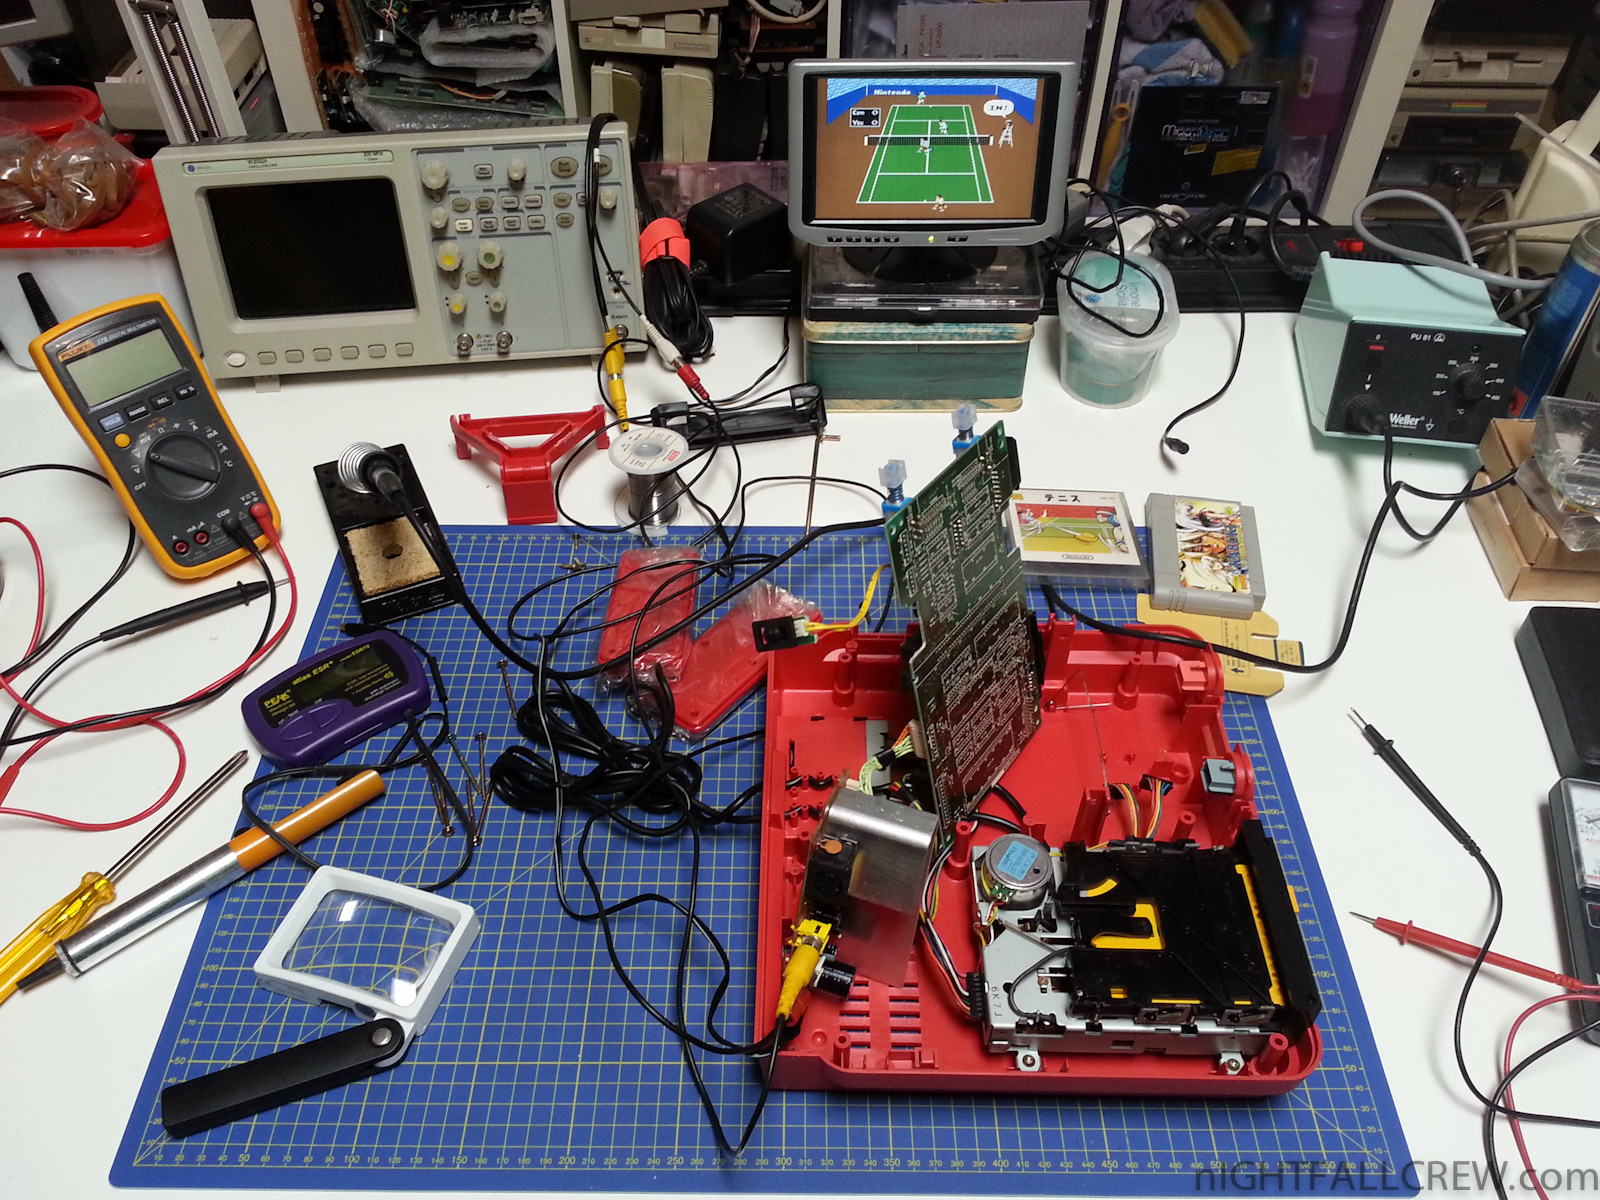 Sharp Twin Famicom AN-500R Repair | nIGHTFALL Blog